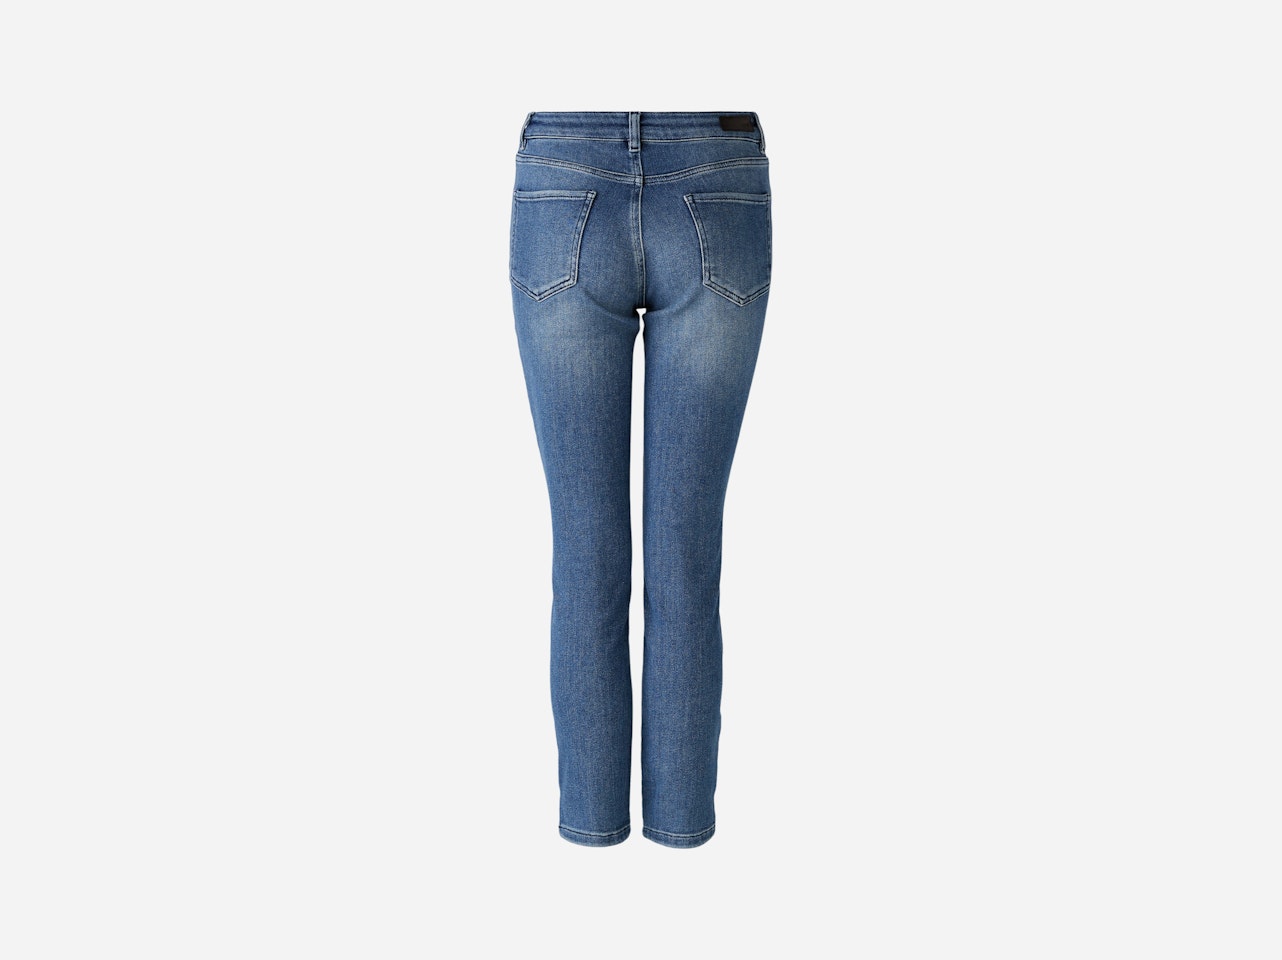 Bild 9 von LOULUH Jeans Skinny fit, cropped in darkblue denim | Oui